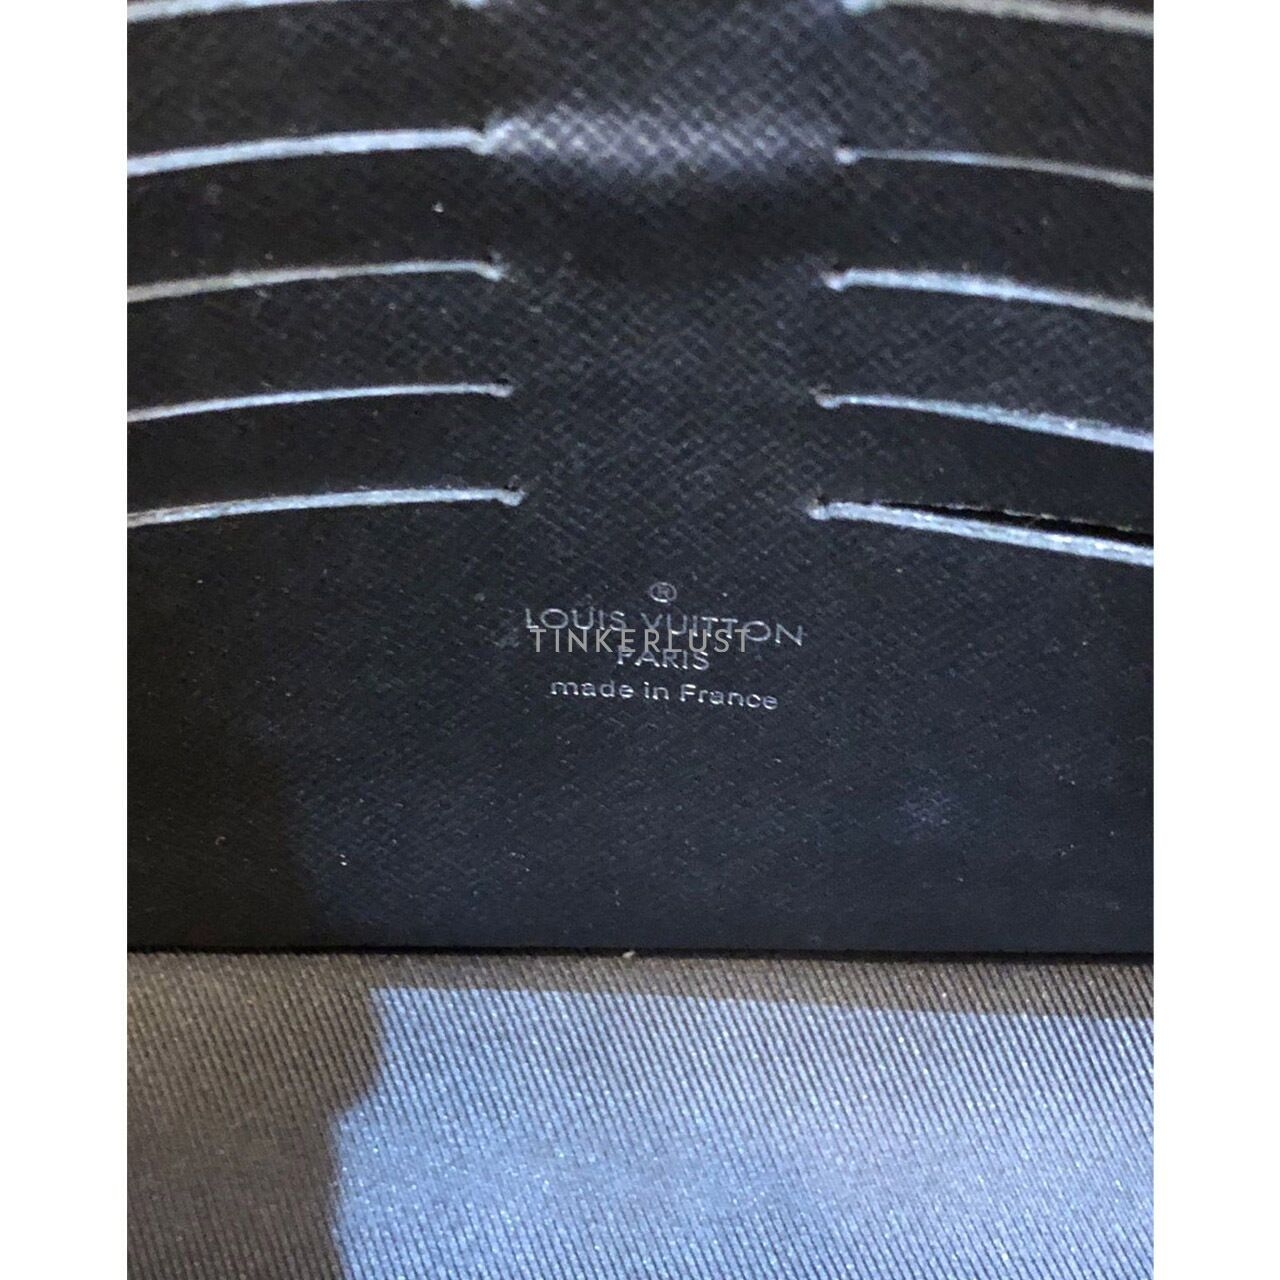 Louis Vuitton Kasai Damier Graphite Canvas 2019 Clutch